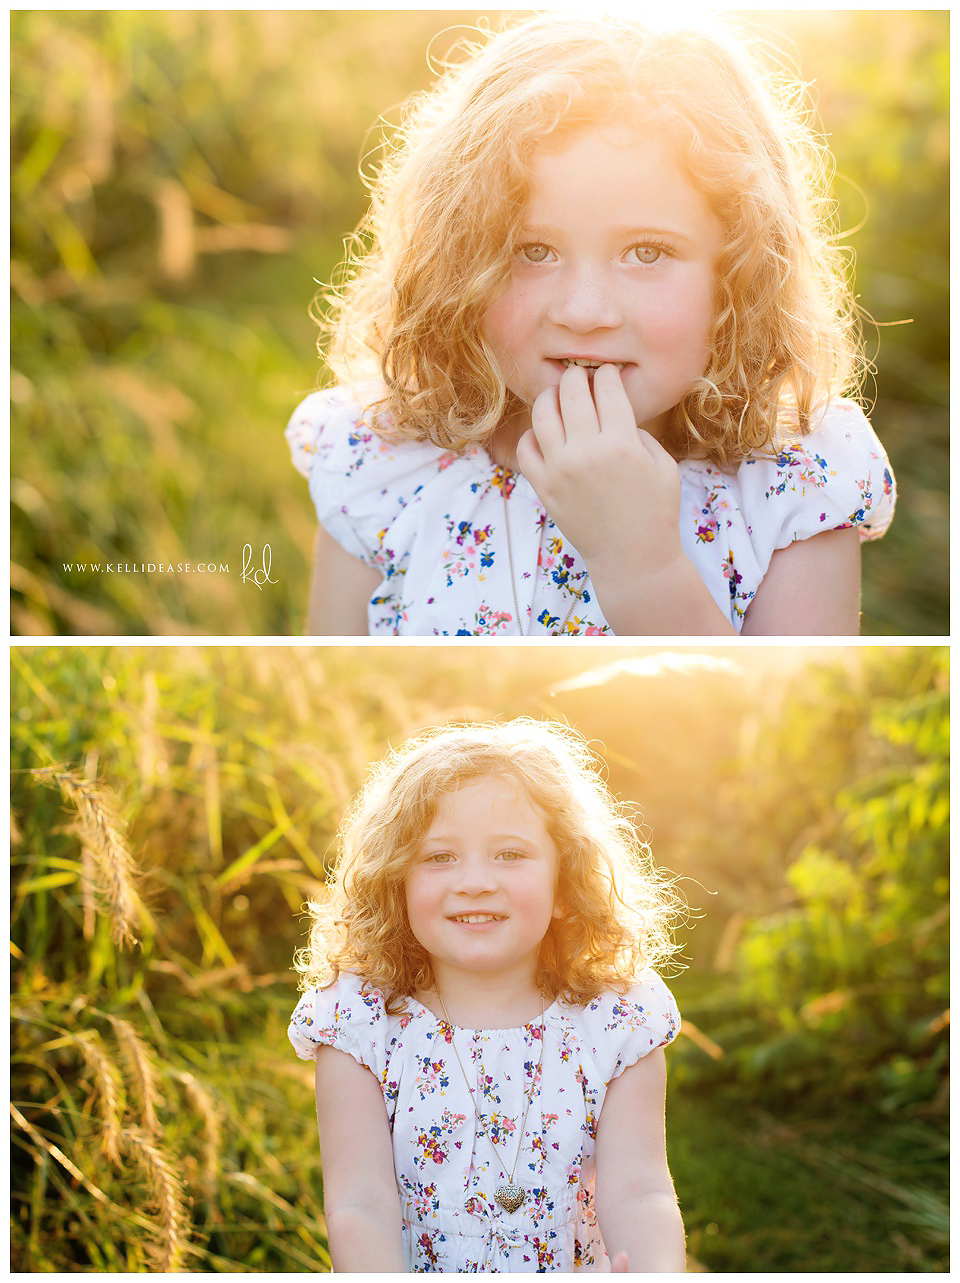 Zoe | West Hartford Sunset Session | CT Children's Photographer